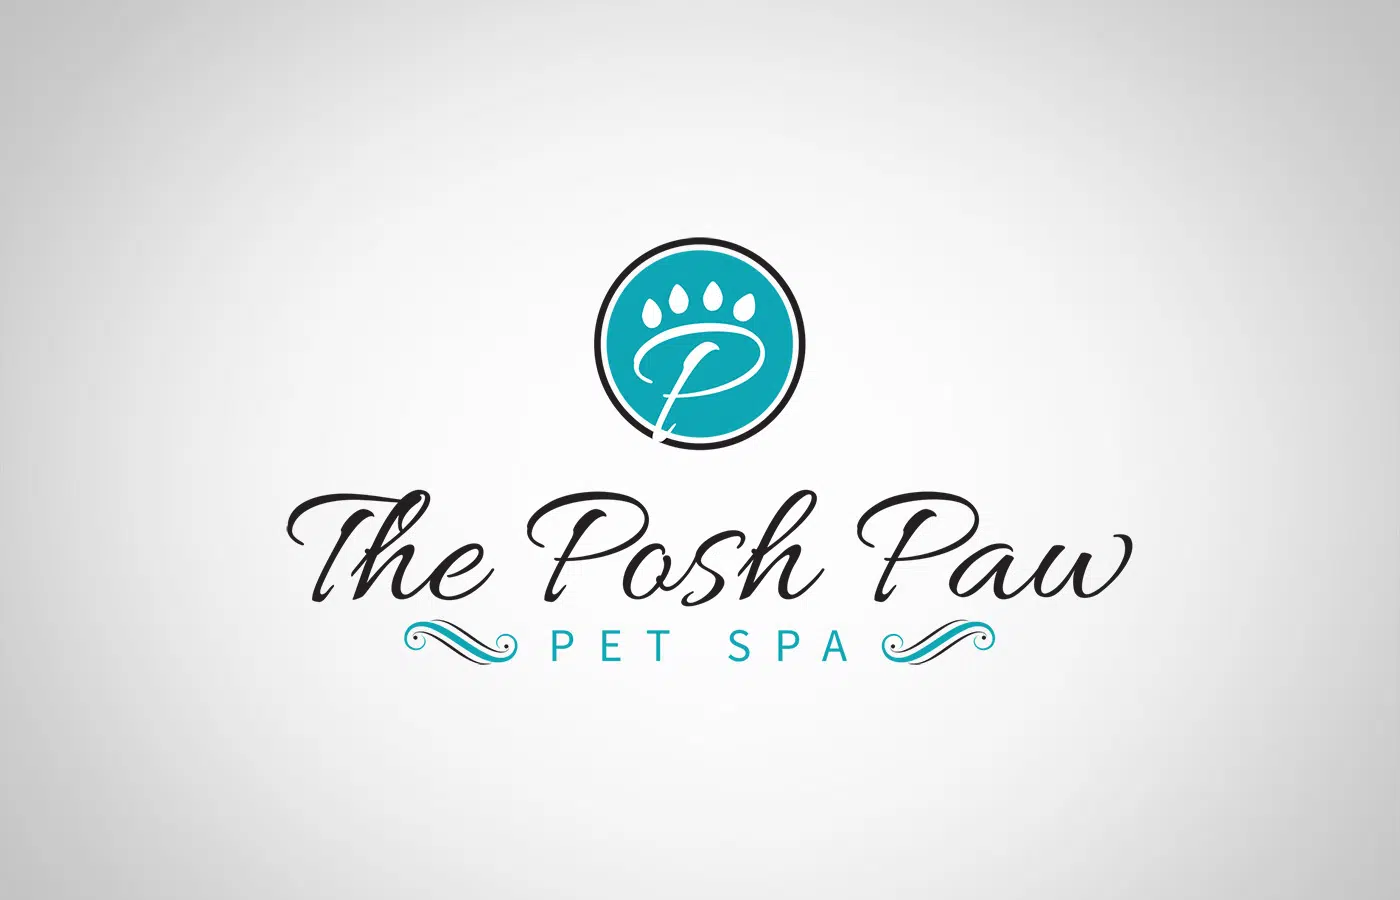 Edmonton Graphic Design | The Posh Paw Pet Spa Logo